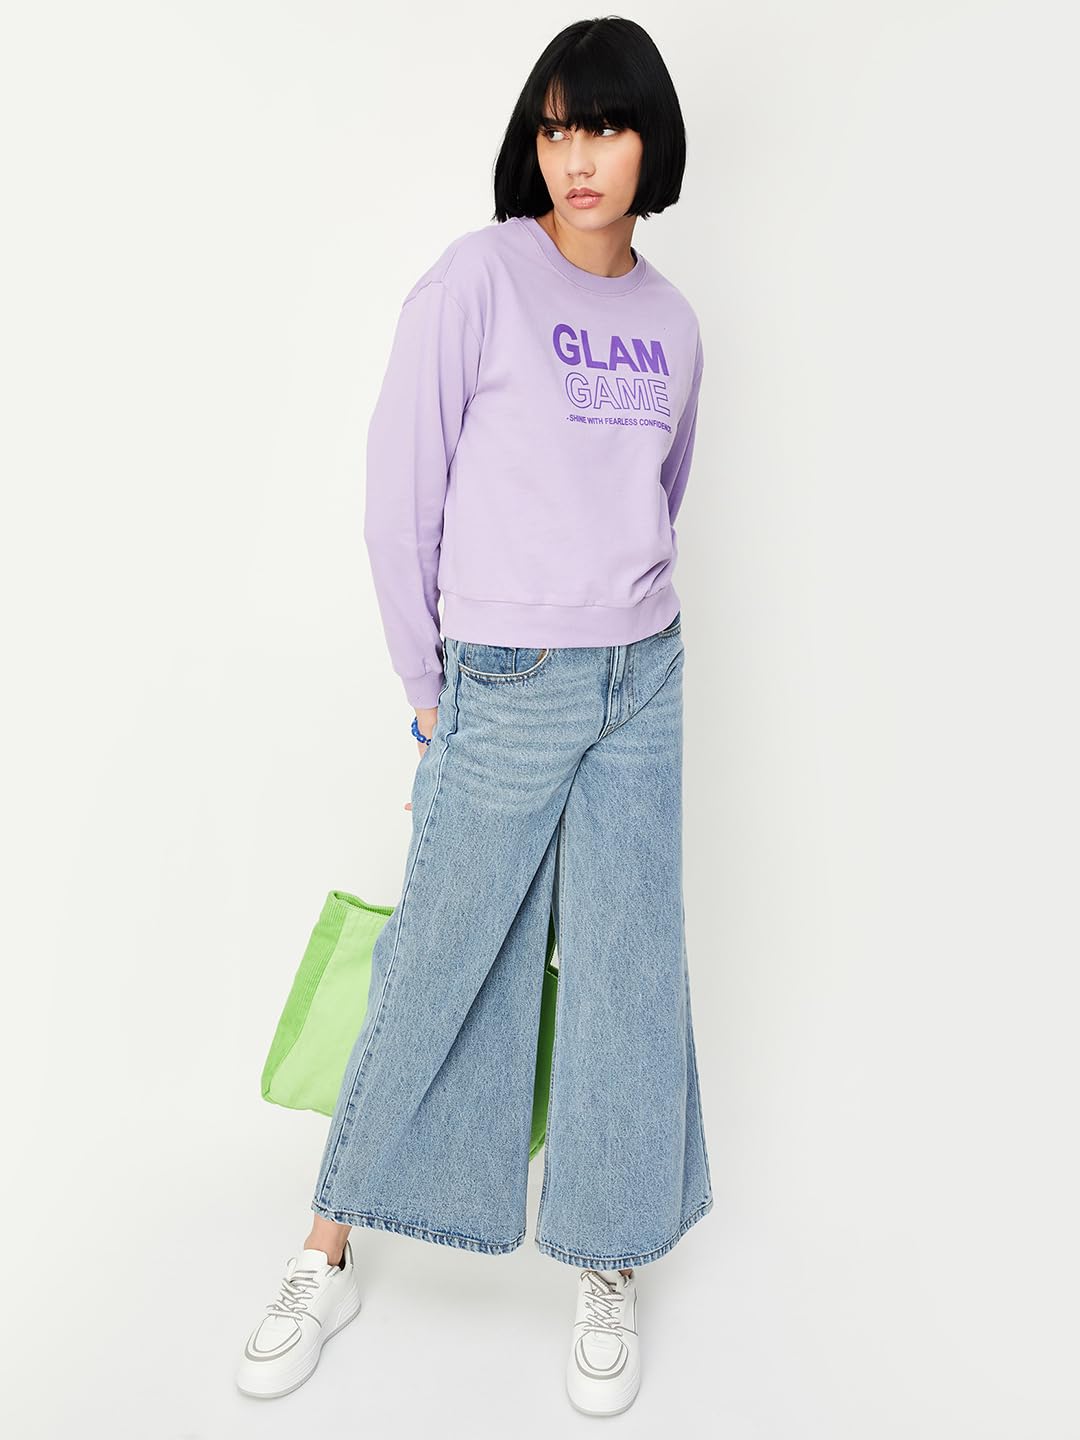 Max Women Typographic Printed Sweatshirt,Lilac,XS